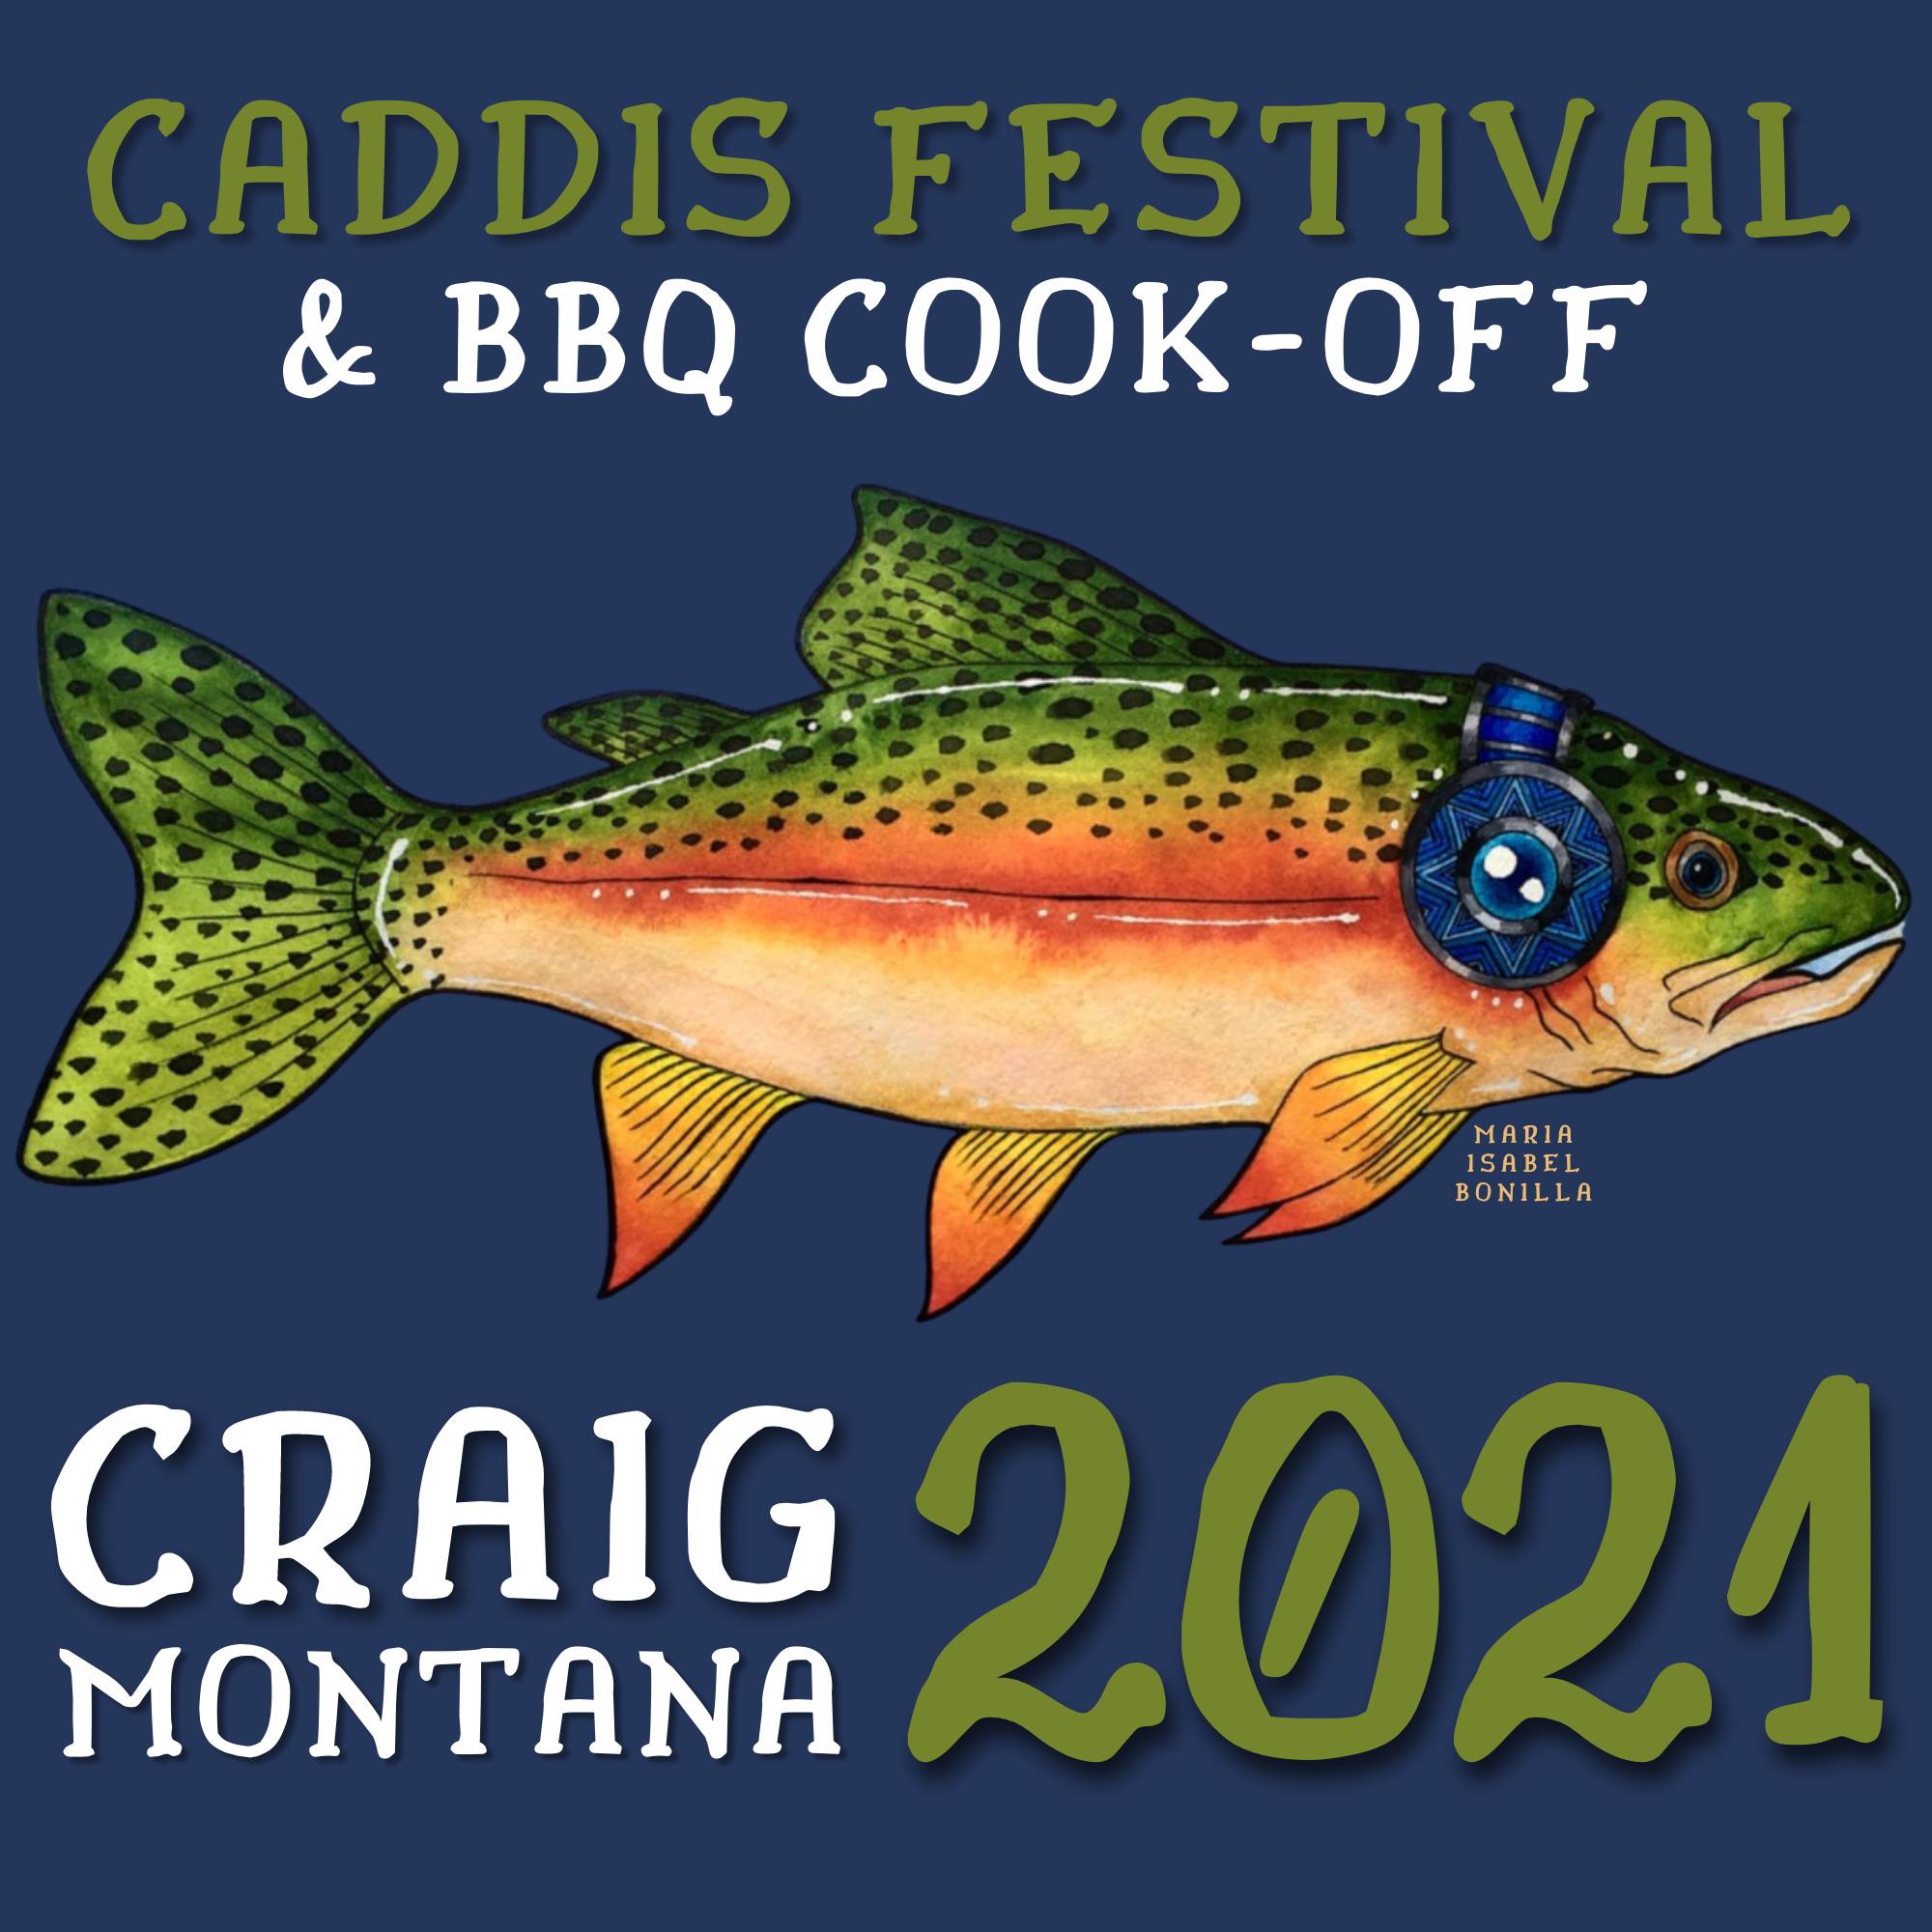 Craig Caddis Festival Saturday August 28th 3pm